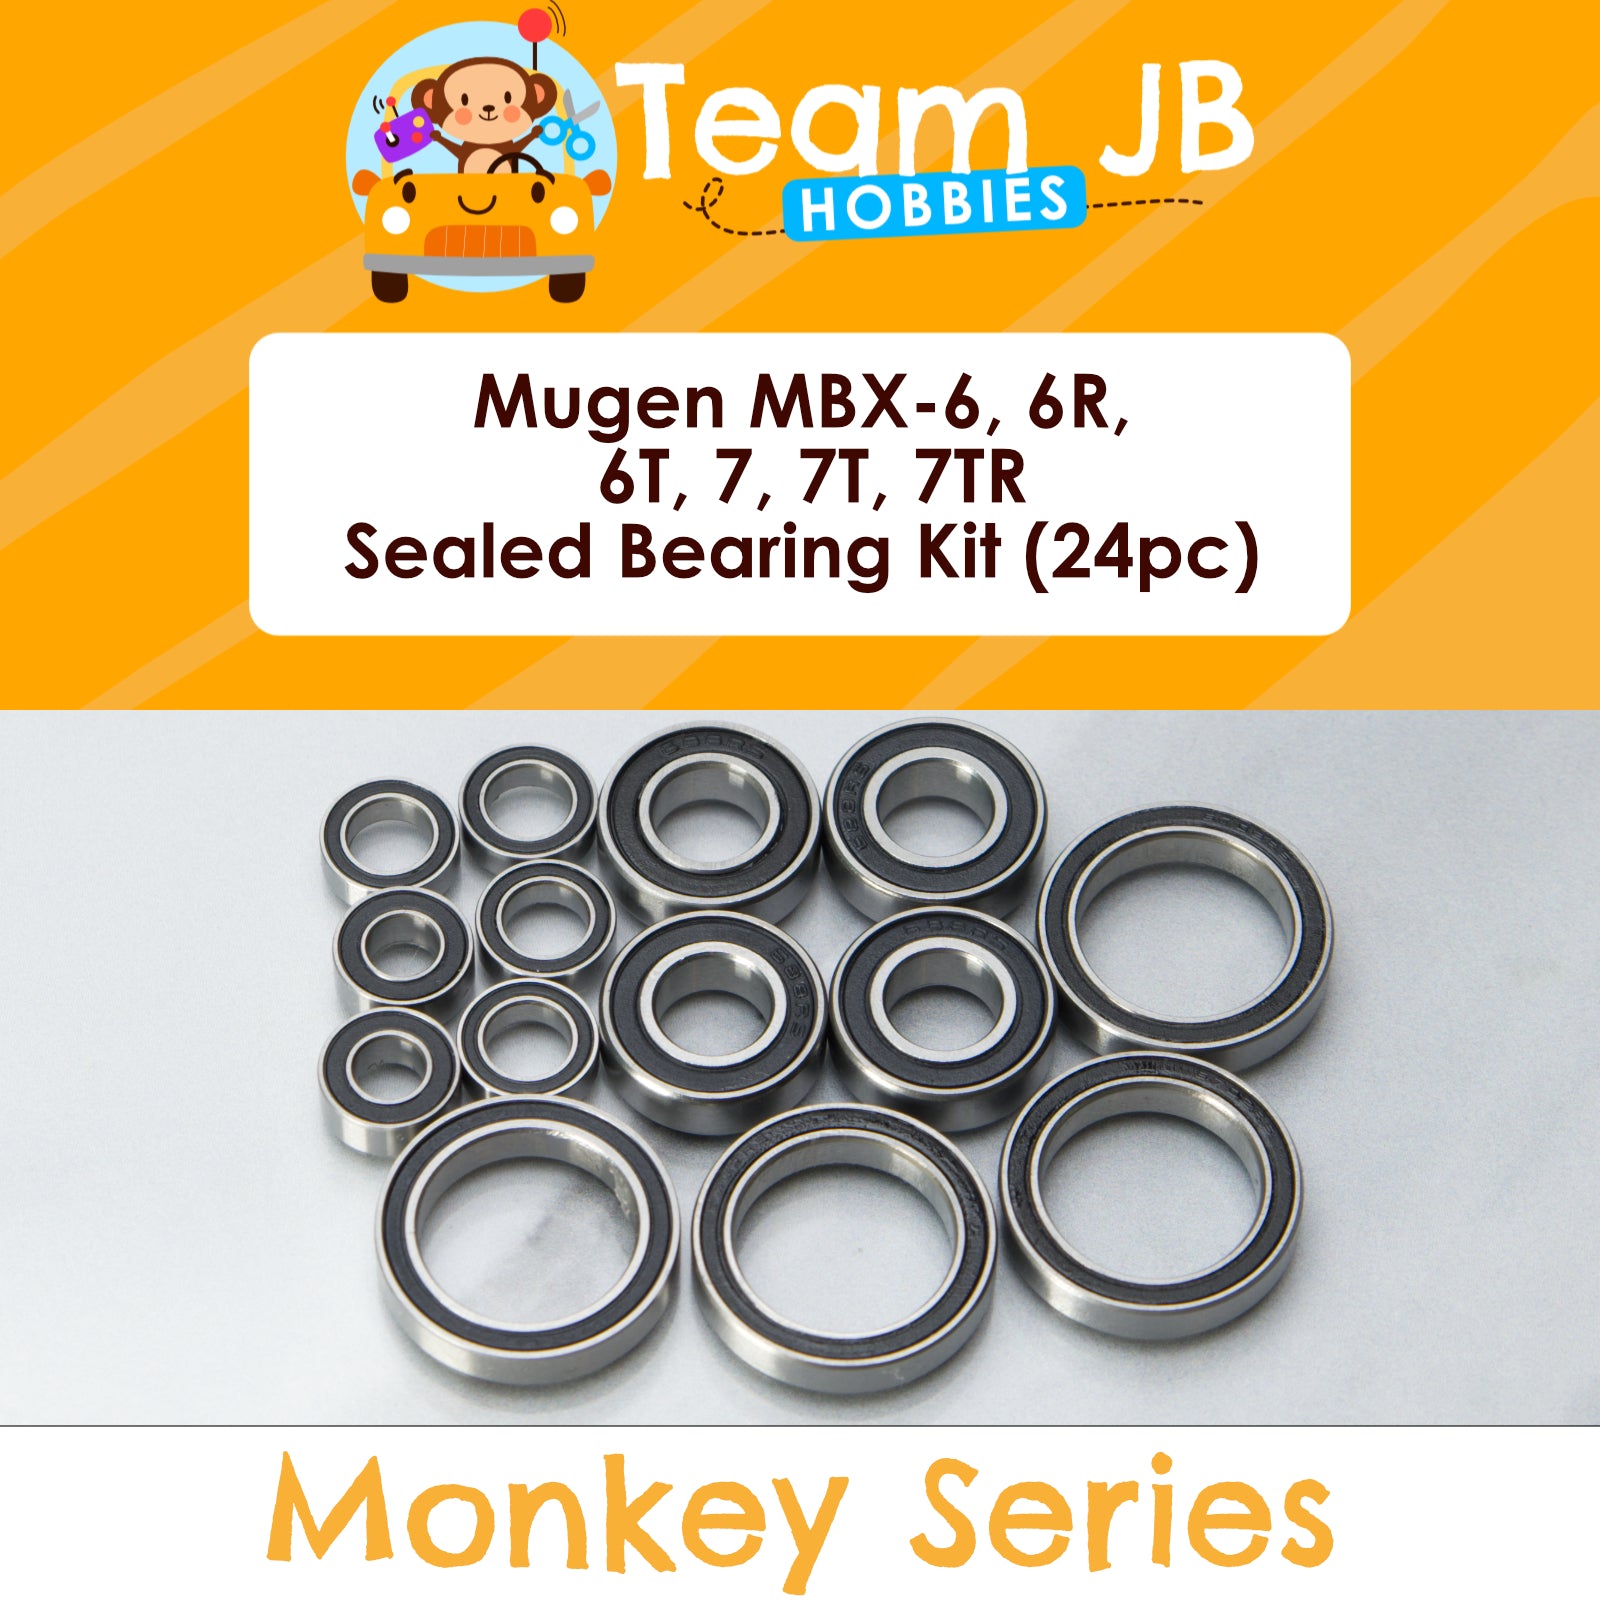 Mugen MBX-6, MBX-6R, MBX-6T, MBX-7, MBX-7T, MBX-7TR - Sealed Bearing Kit